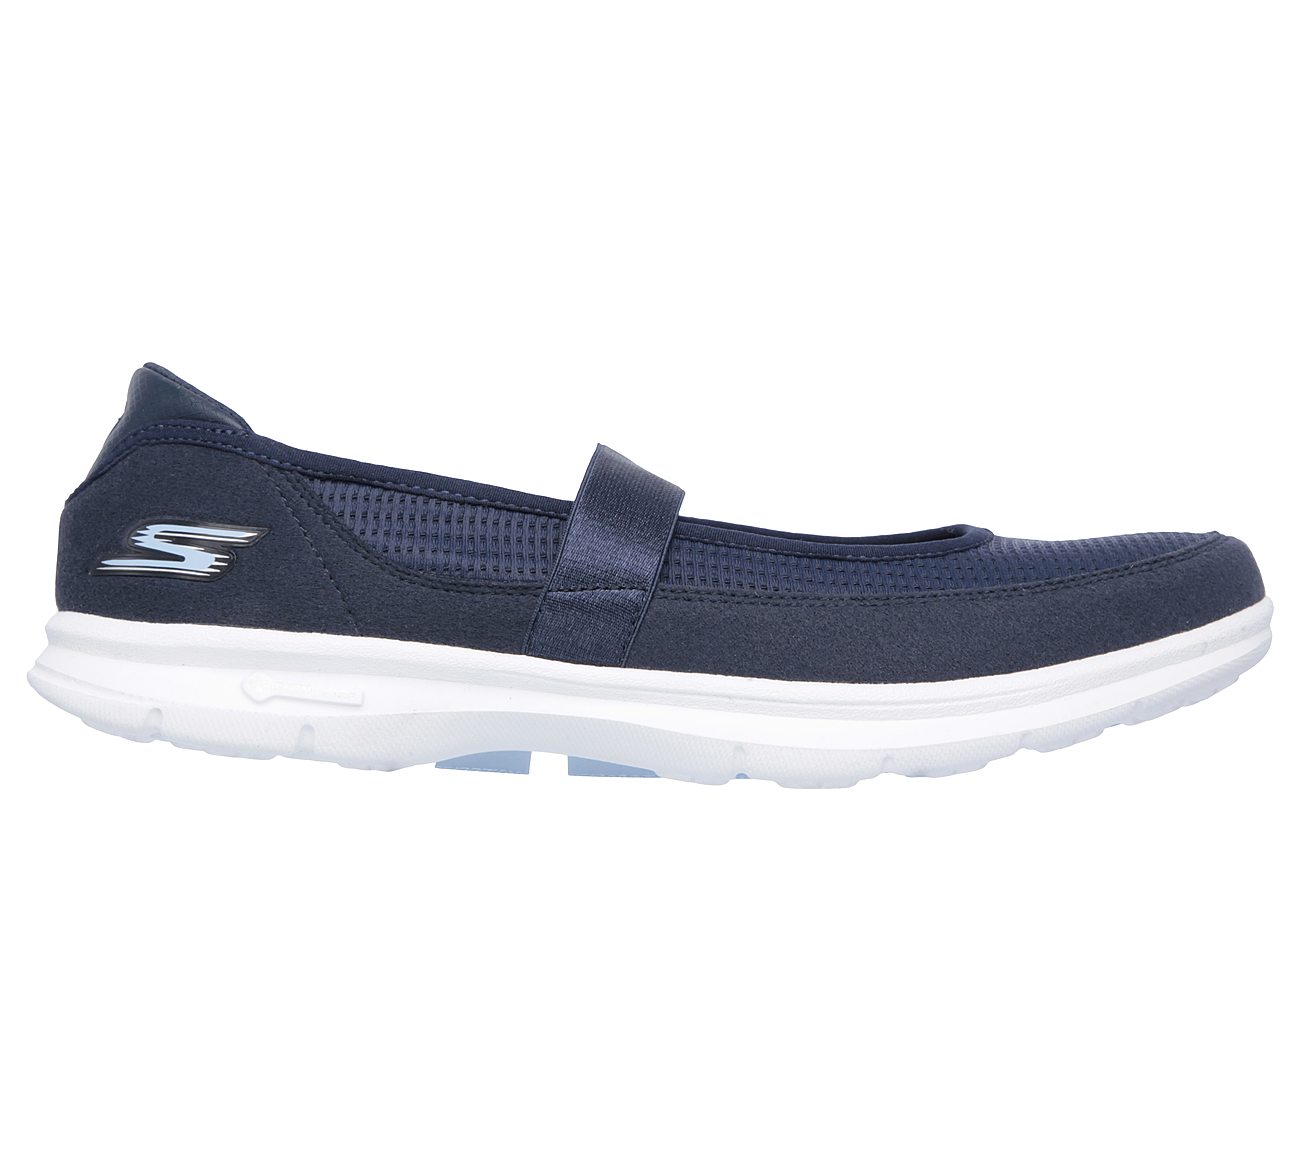 Buy SKECHERS Skechers GO STEP - Original Comfort Shoes Shoes only 